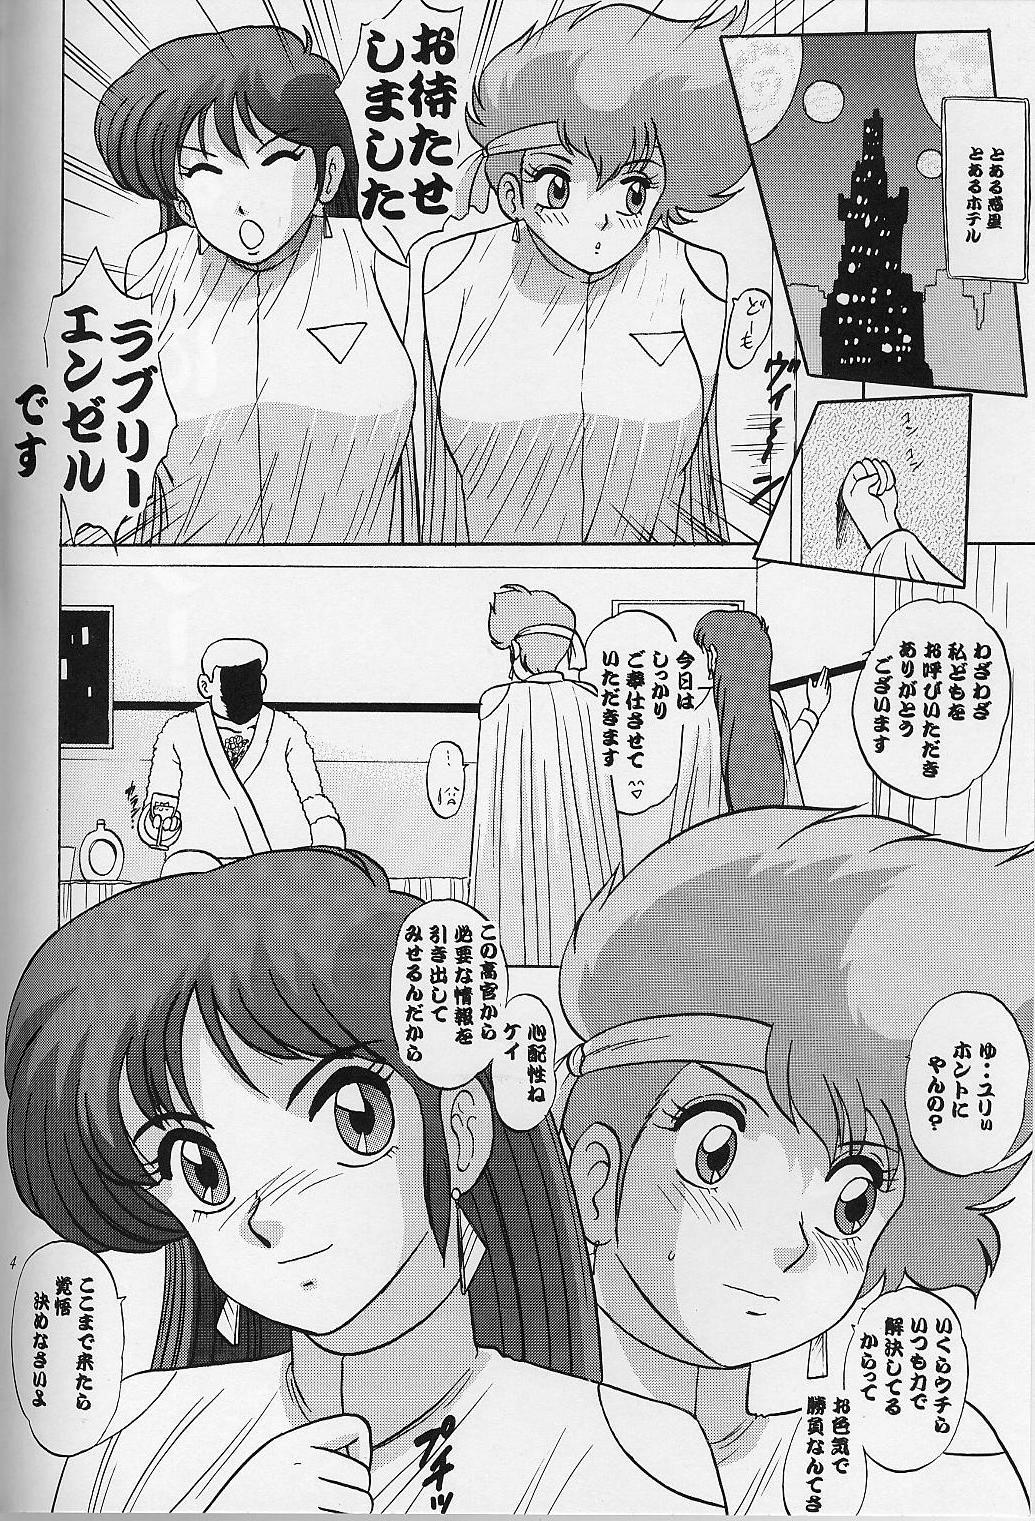 Japan Tenshi no Himitsu - Dirty pair Amazing - Page 3